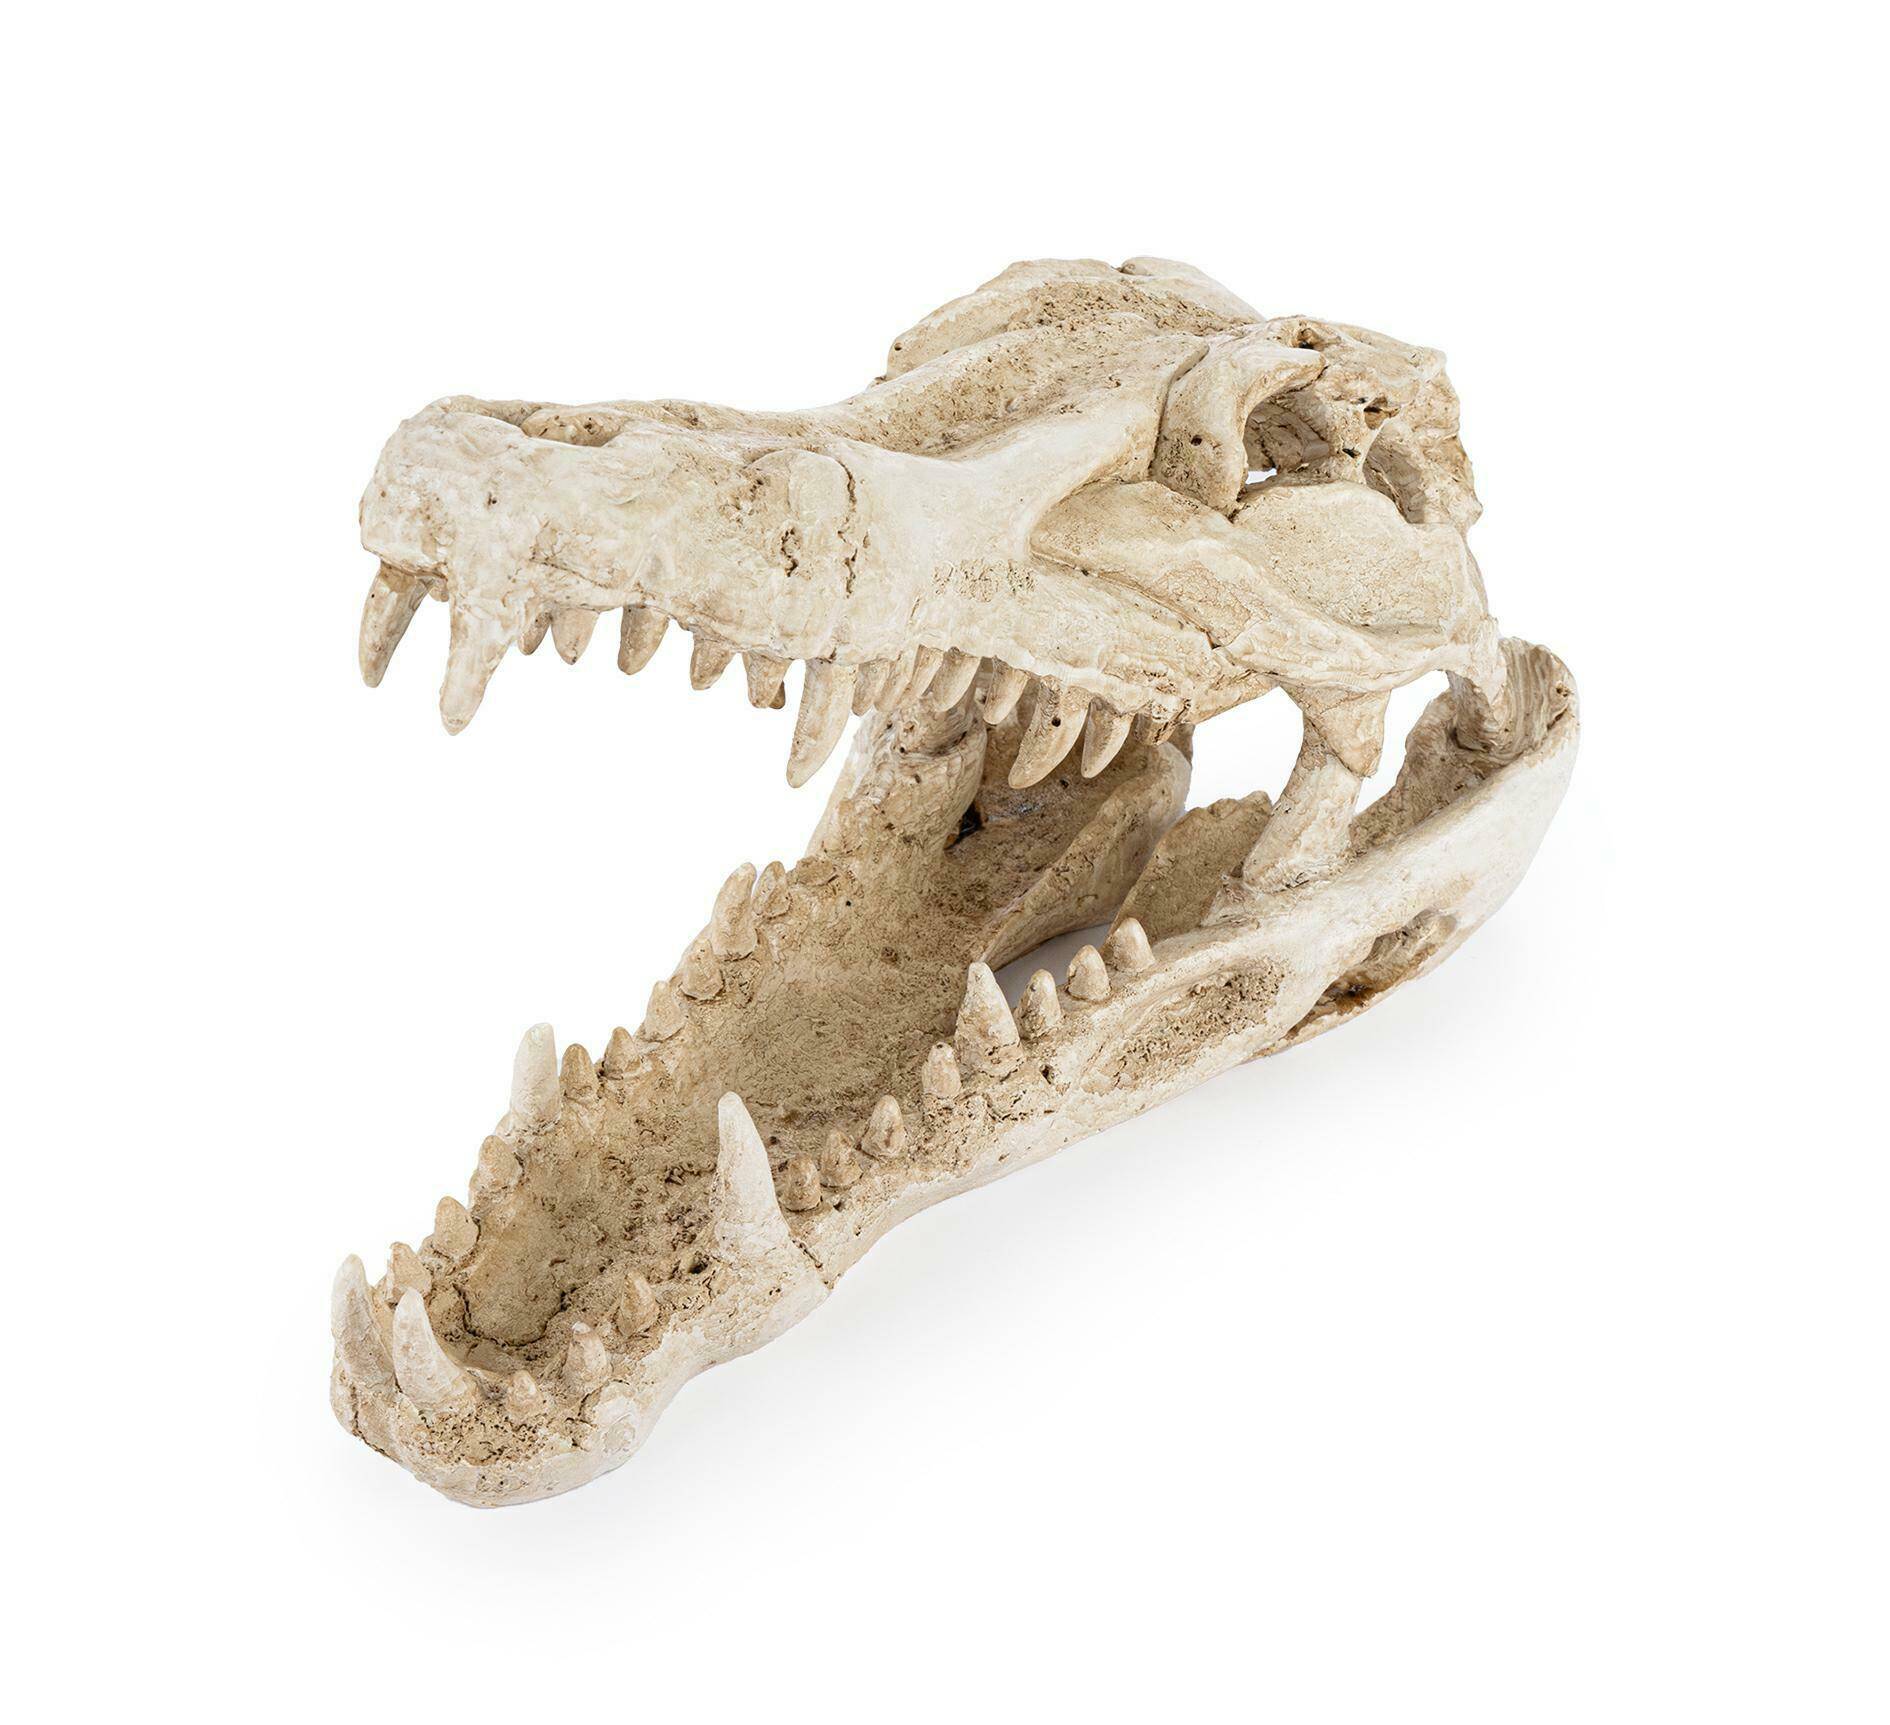 R178 ozdoba terrarium czaszka krokodyla